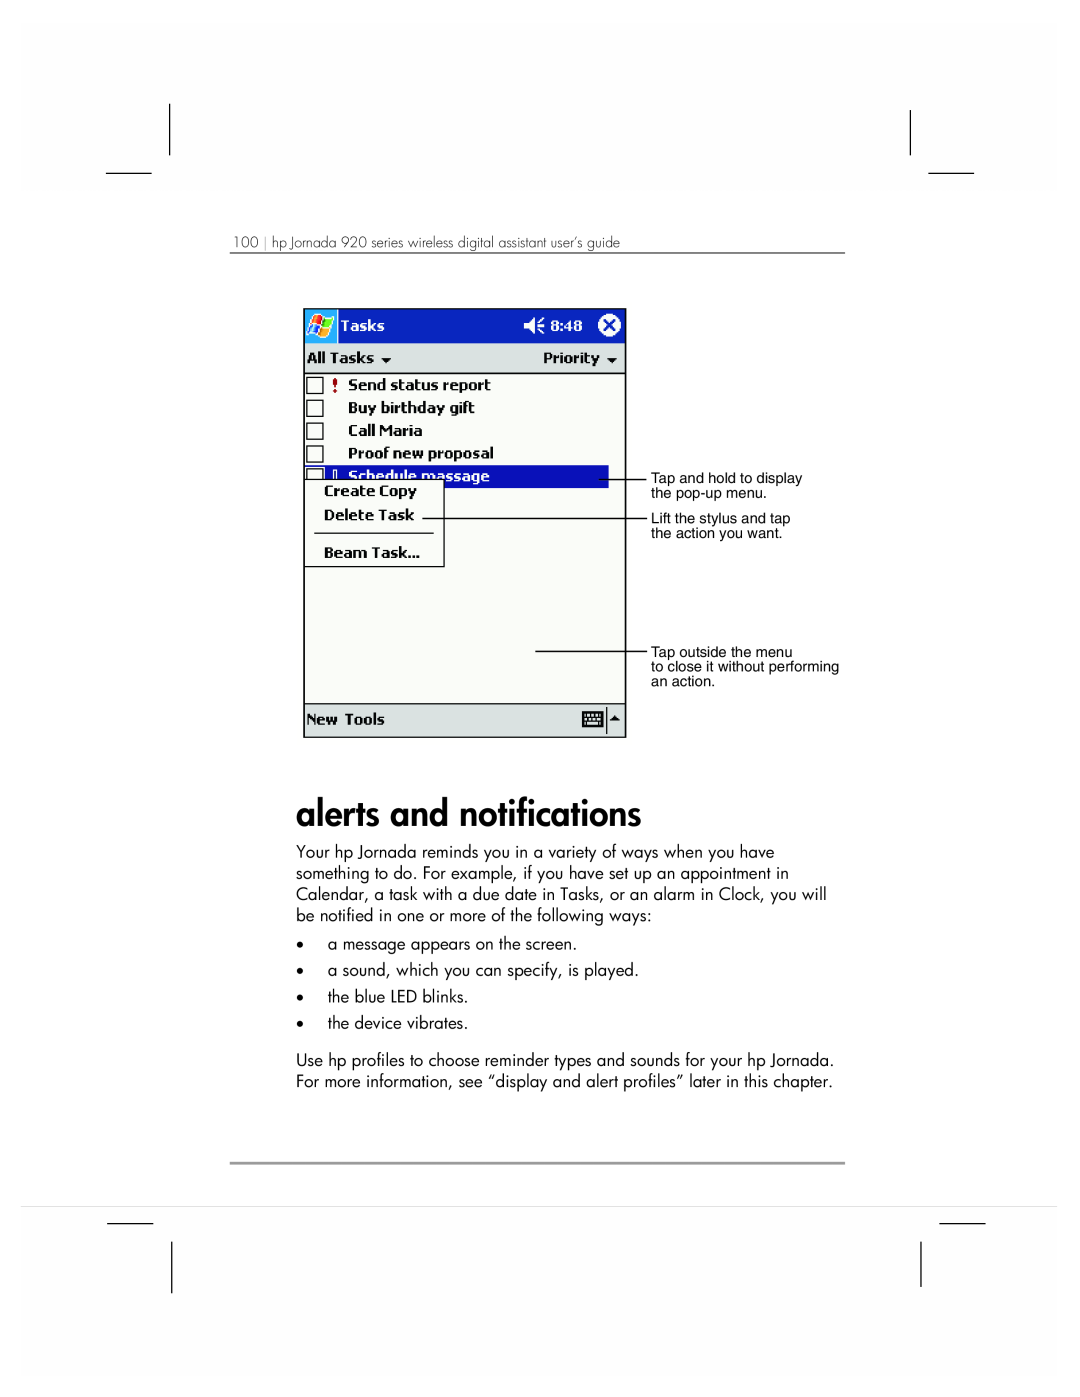 HP 920 manual alerts and notifications 